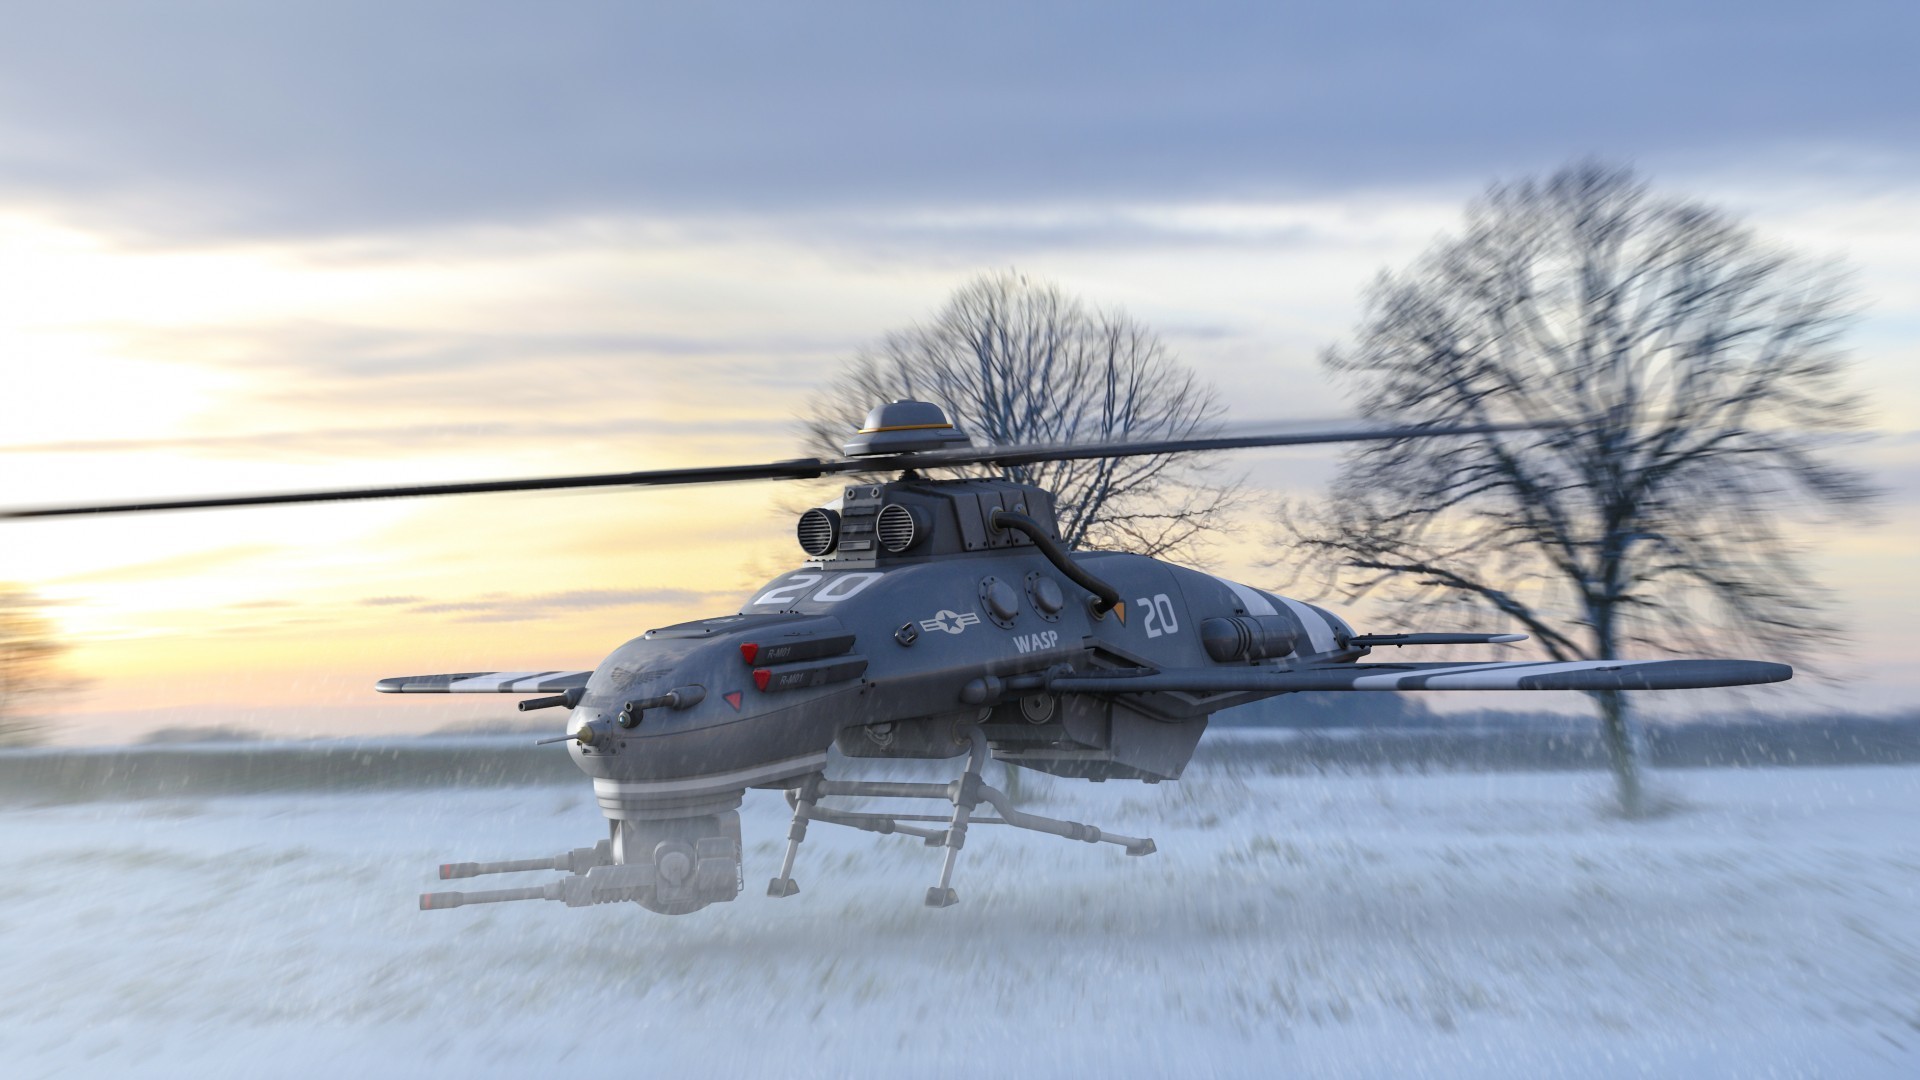 aviation winter snow cold ice weather frozen vehicle frost landscape storm transportation system